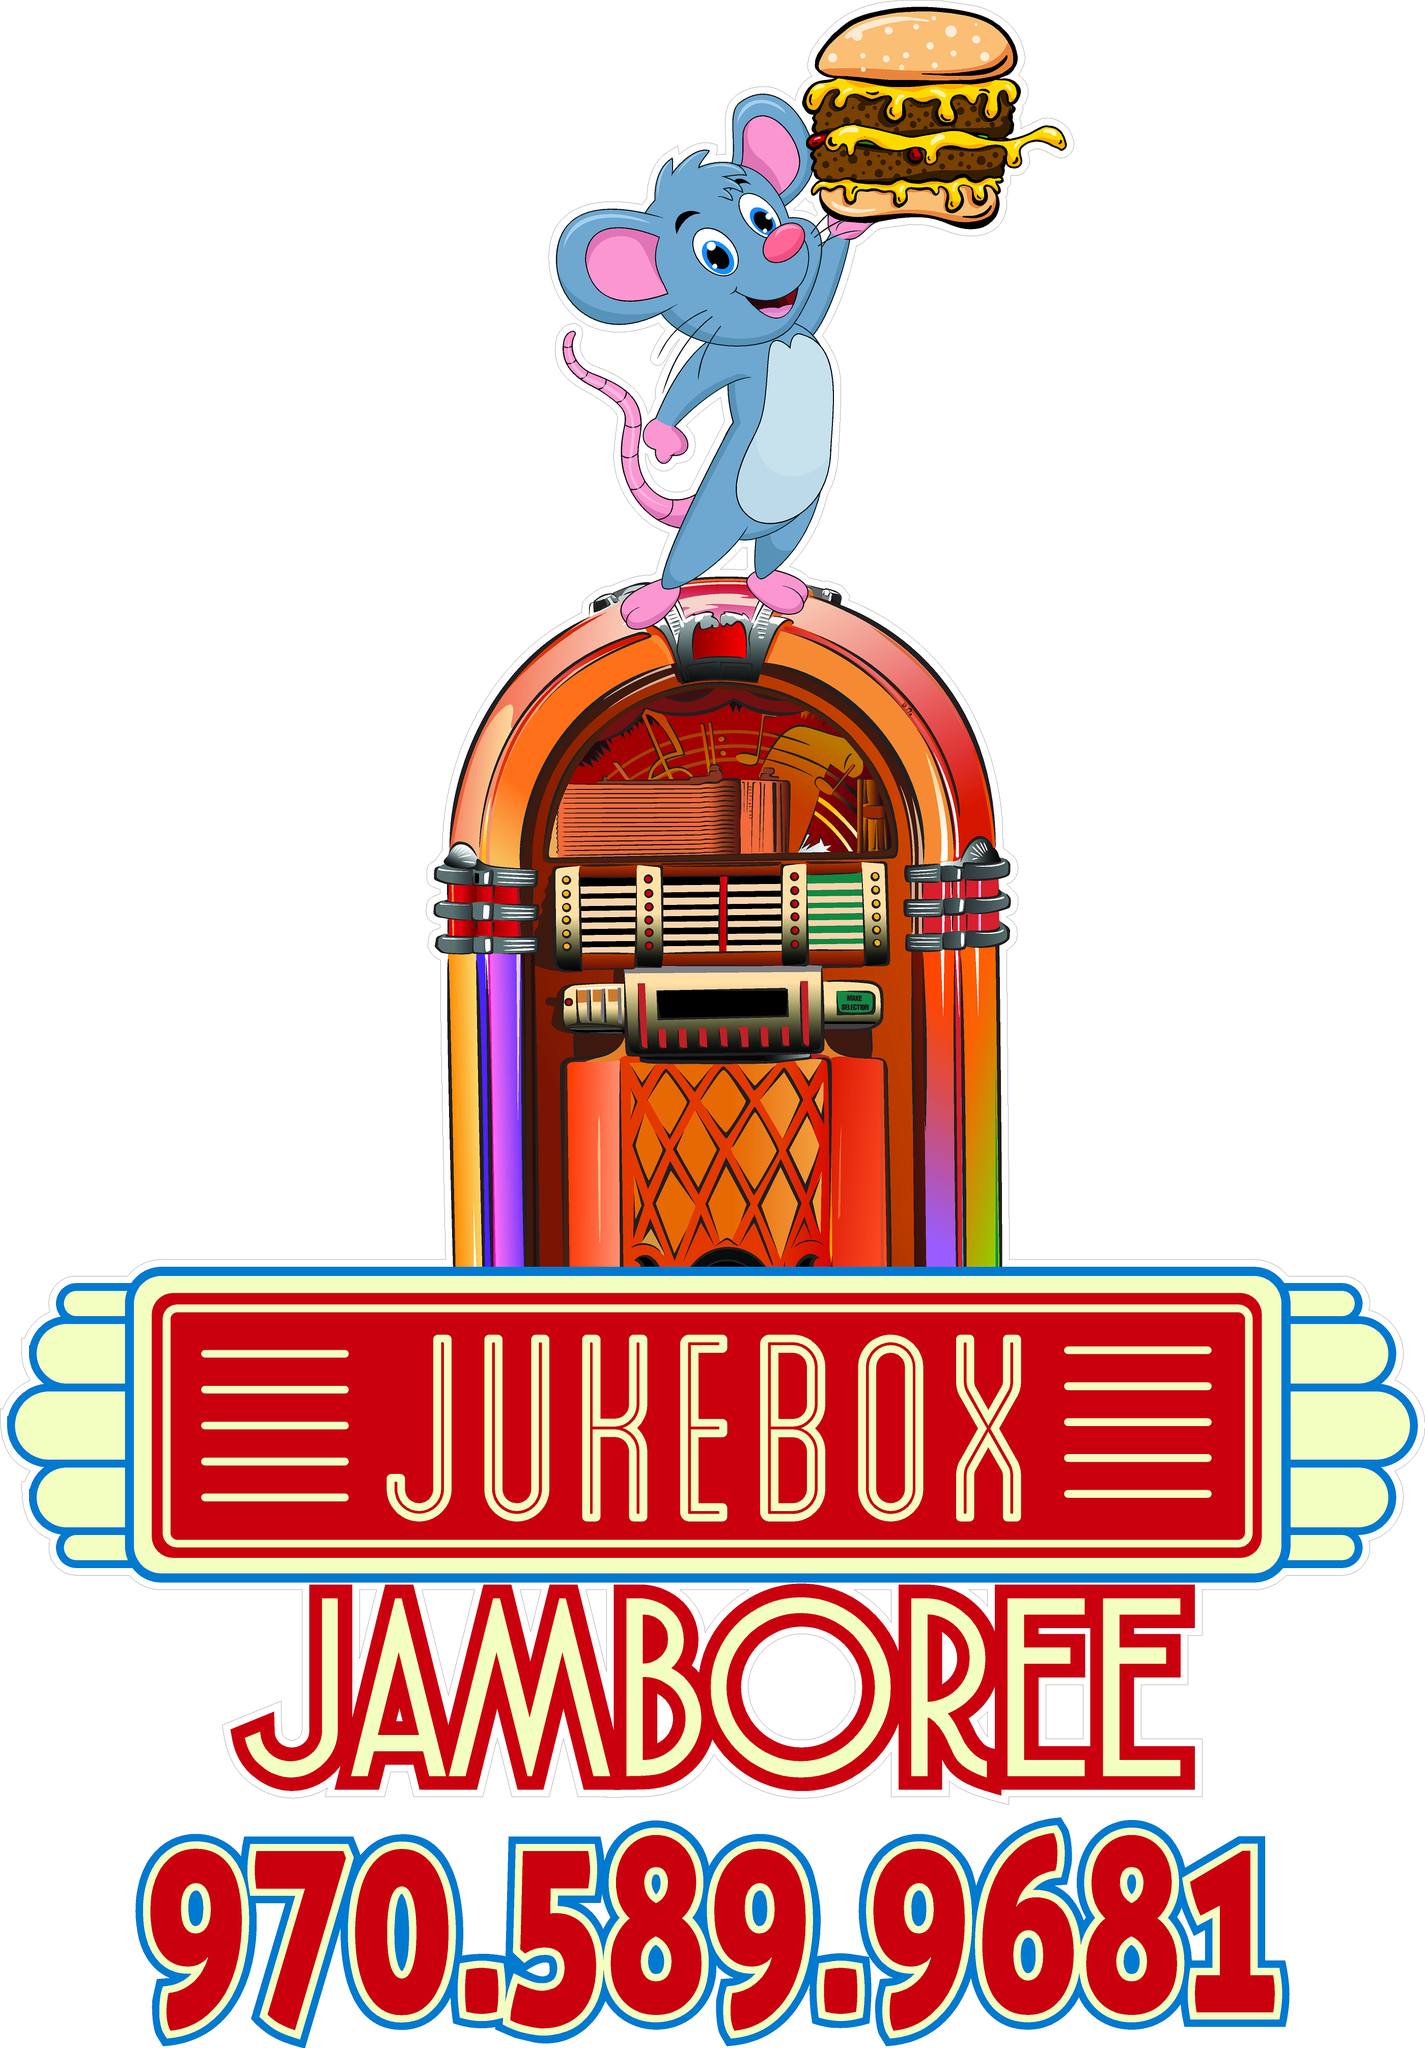 Jukebox Jamboree Food Trailer